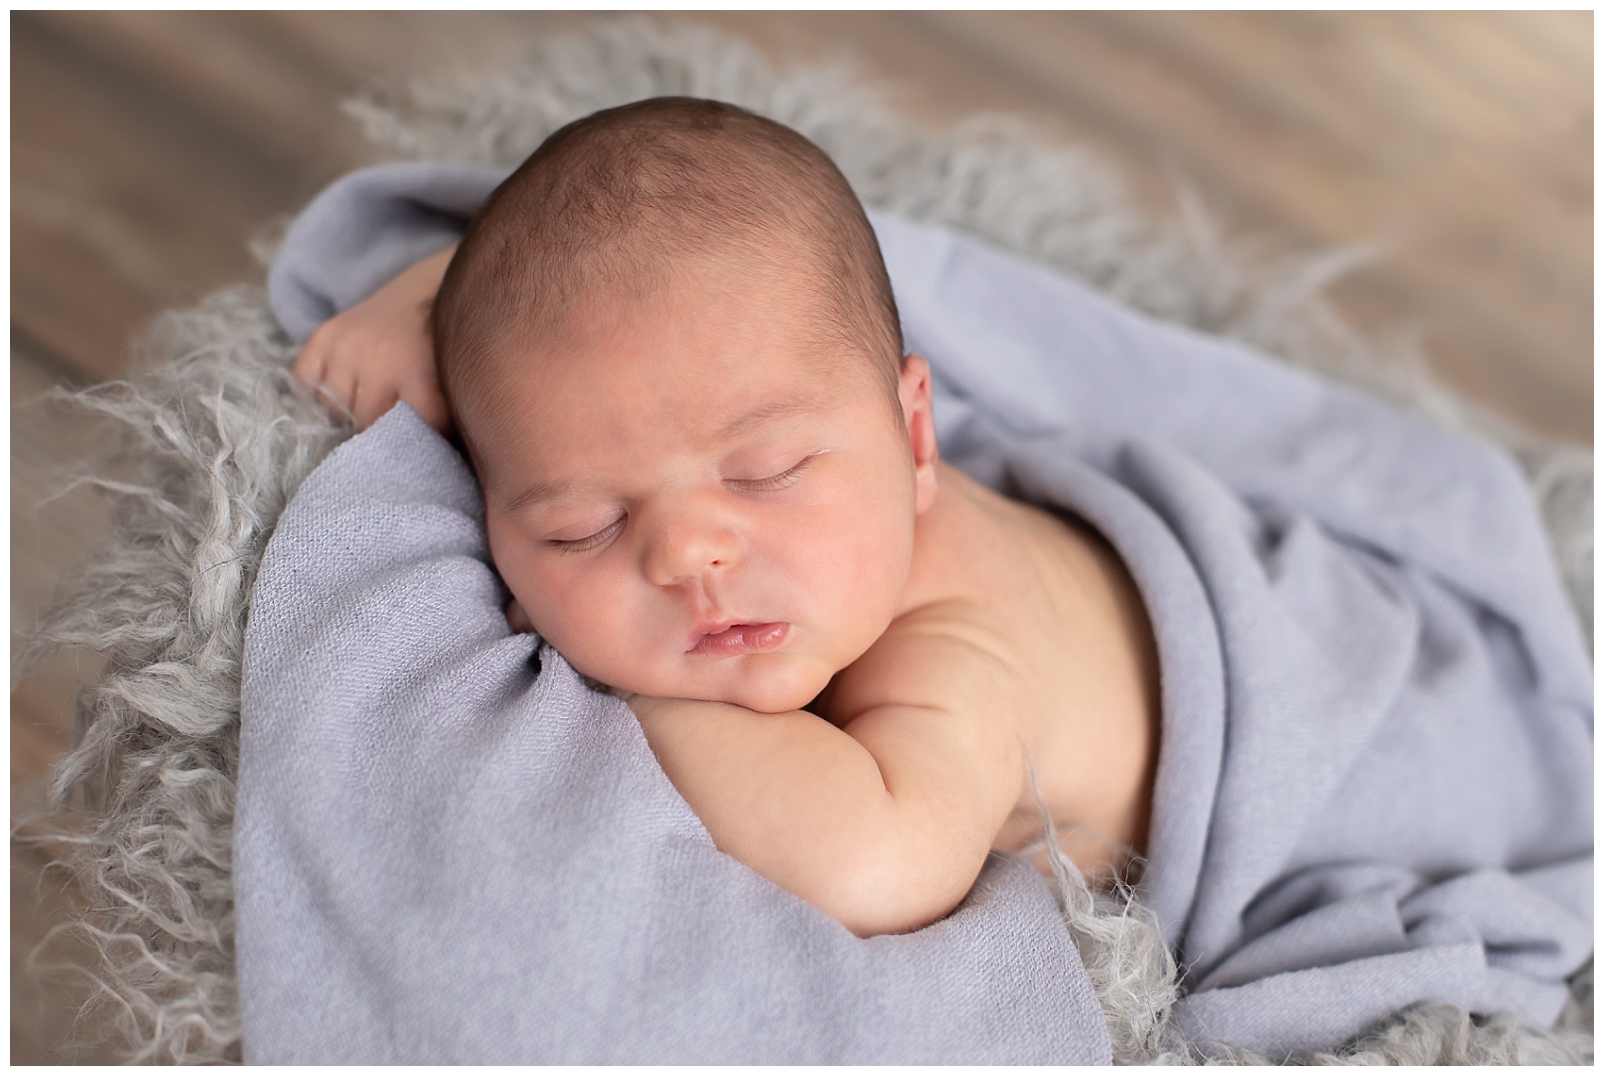 newborn sleeping chin on hands pose